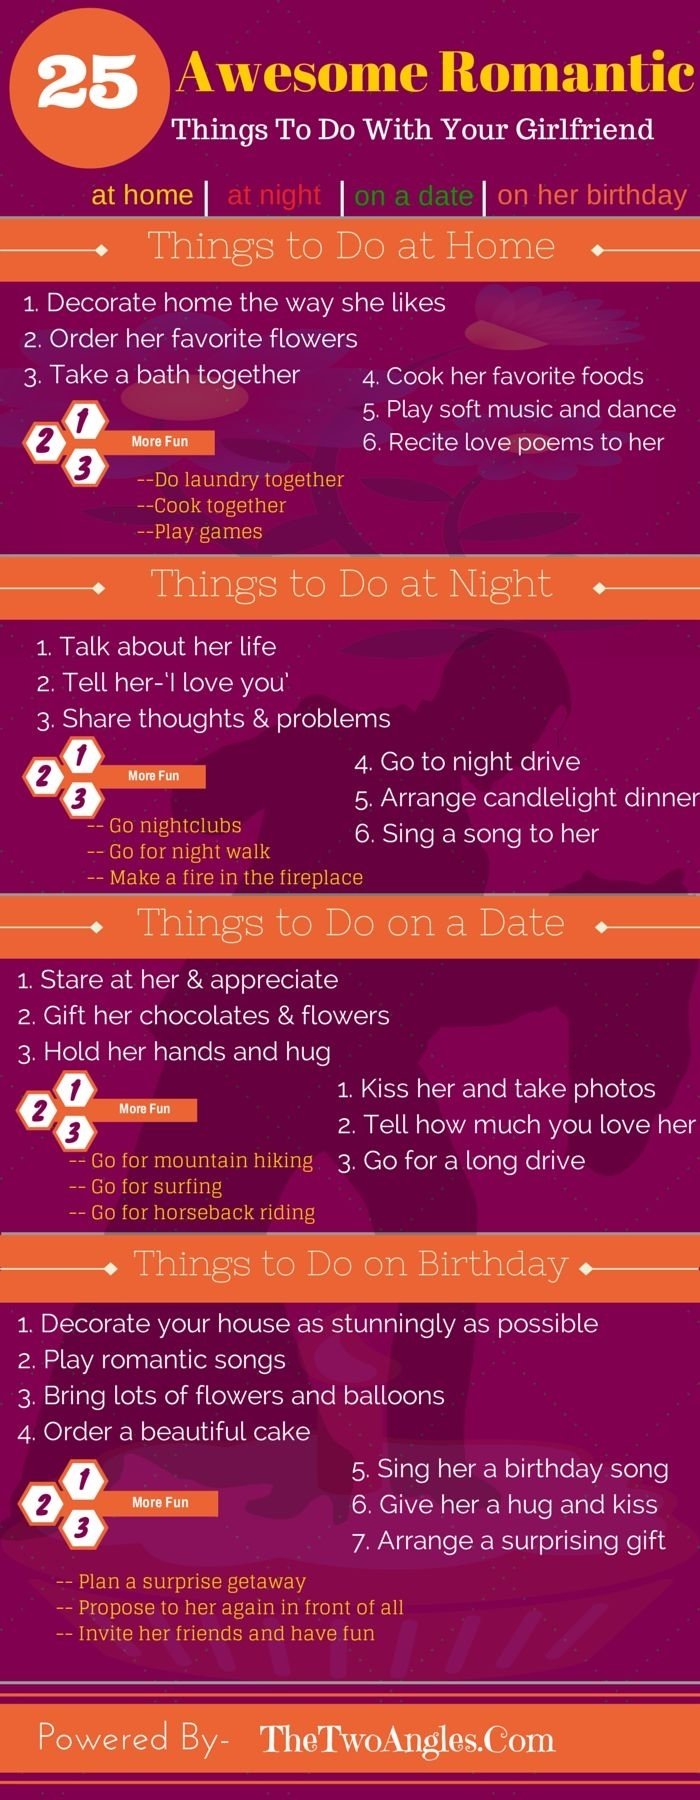 10 Fabulous Romantic Date Ideas For Your Girlfriend 117 best ideas future girlfriend images on pinterest 2022